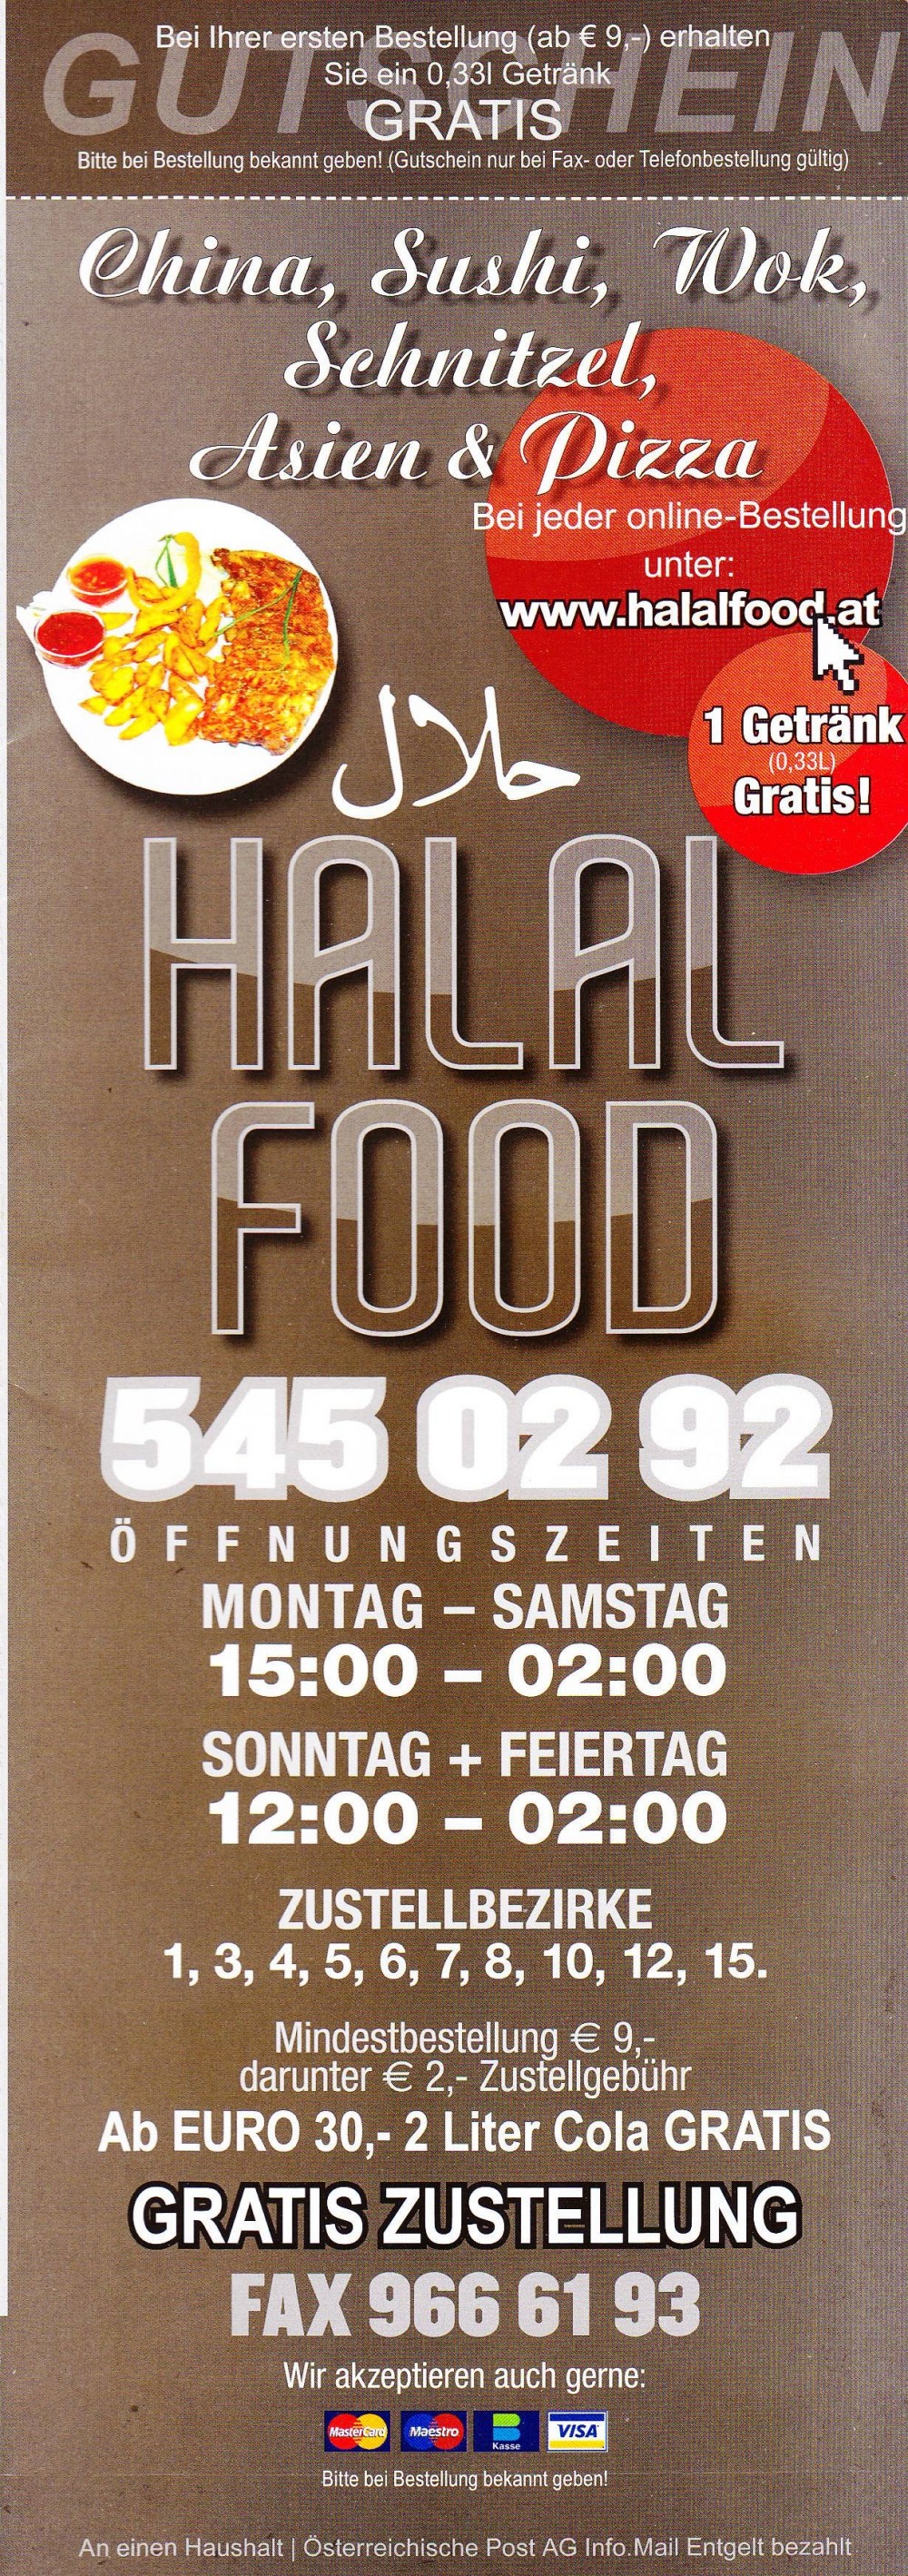 Halal Food Karte Seite 1 - Halal Food - Wien